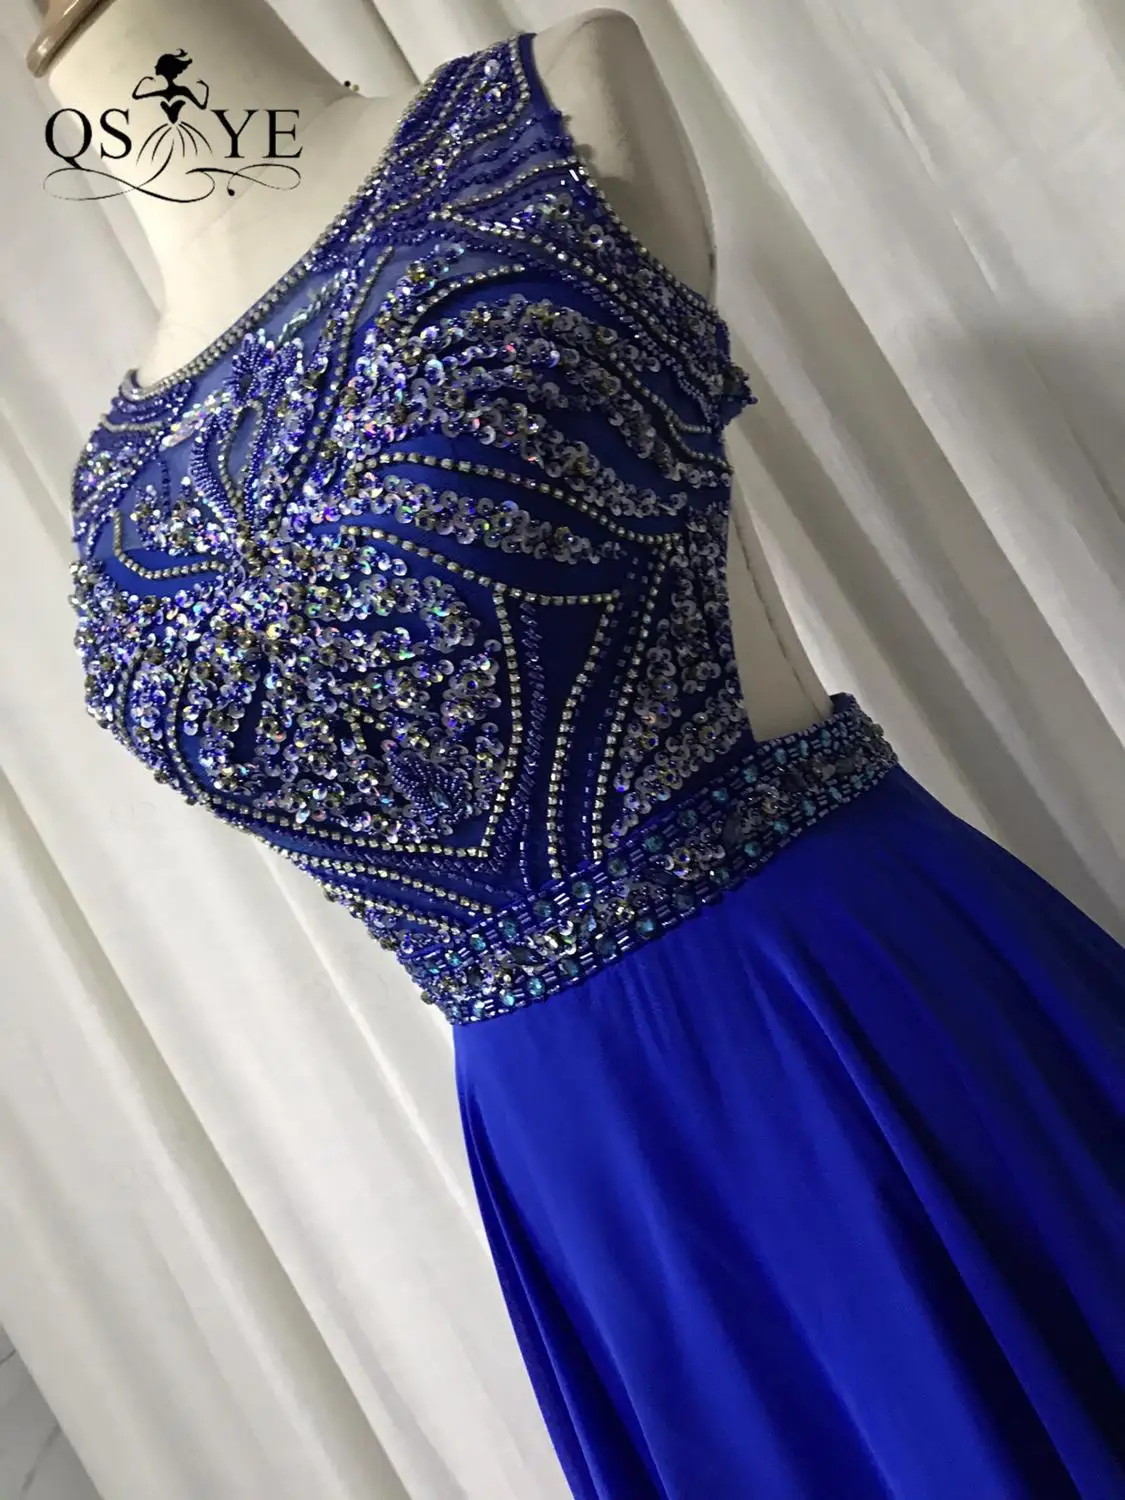 

QSYYE Broken Size Royal Blue Prom Dress Chiffon Long Evening Dress Elegant Scoop Neck Beads Bodice Open Back Woman Party Dress